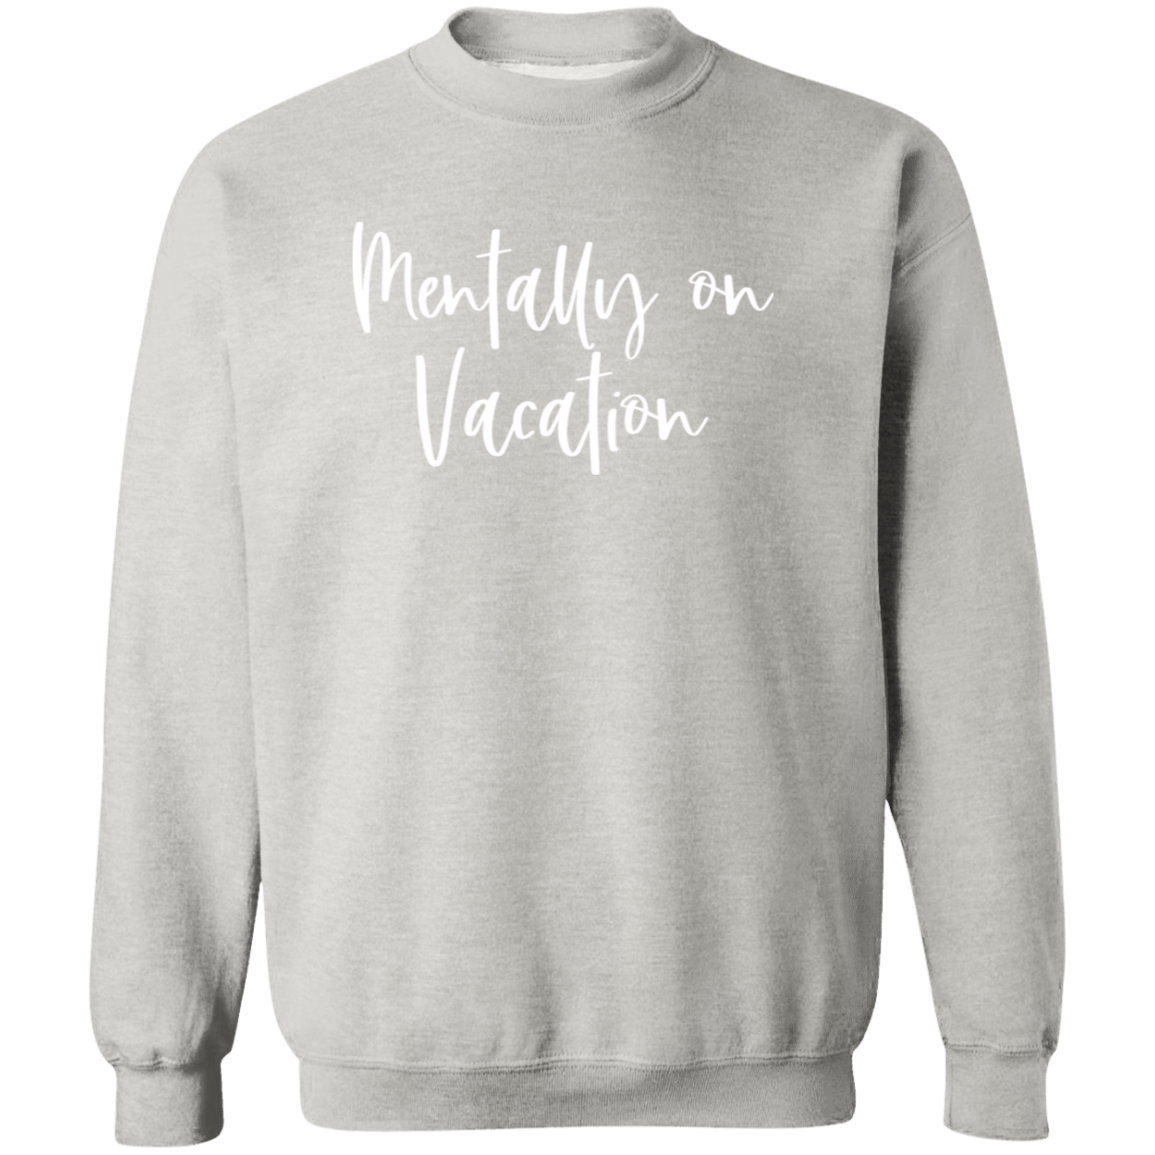 Mentally On Vacation Sweatshirt